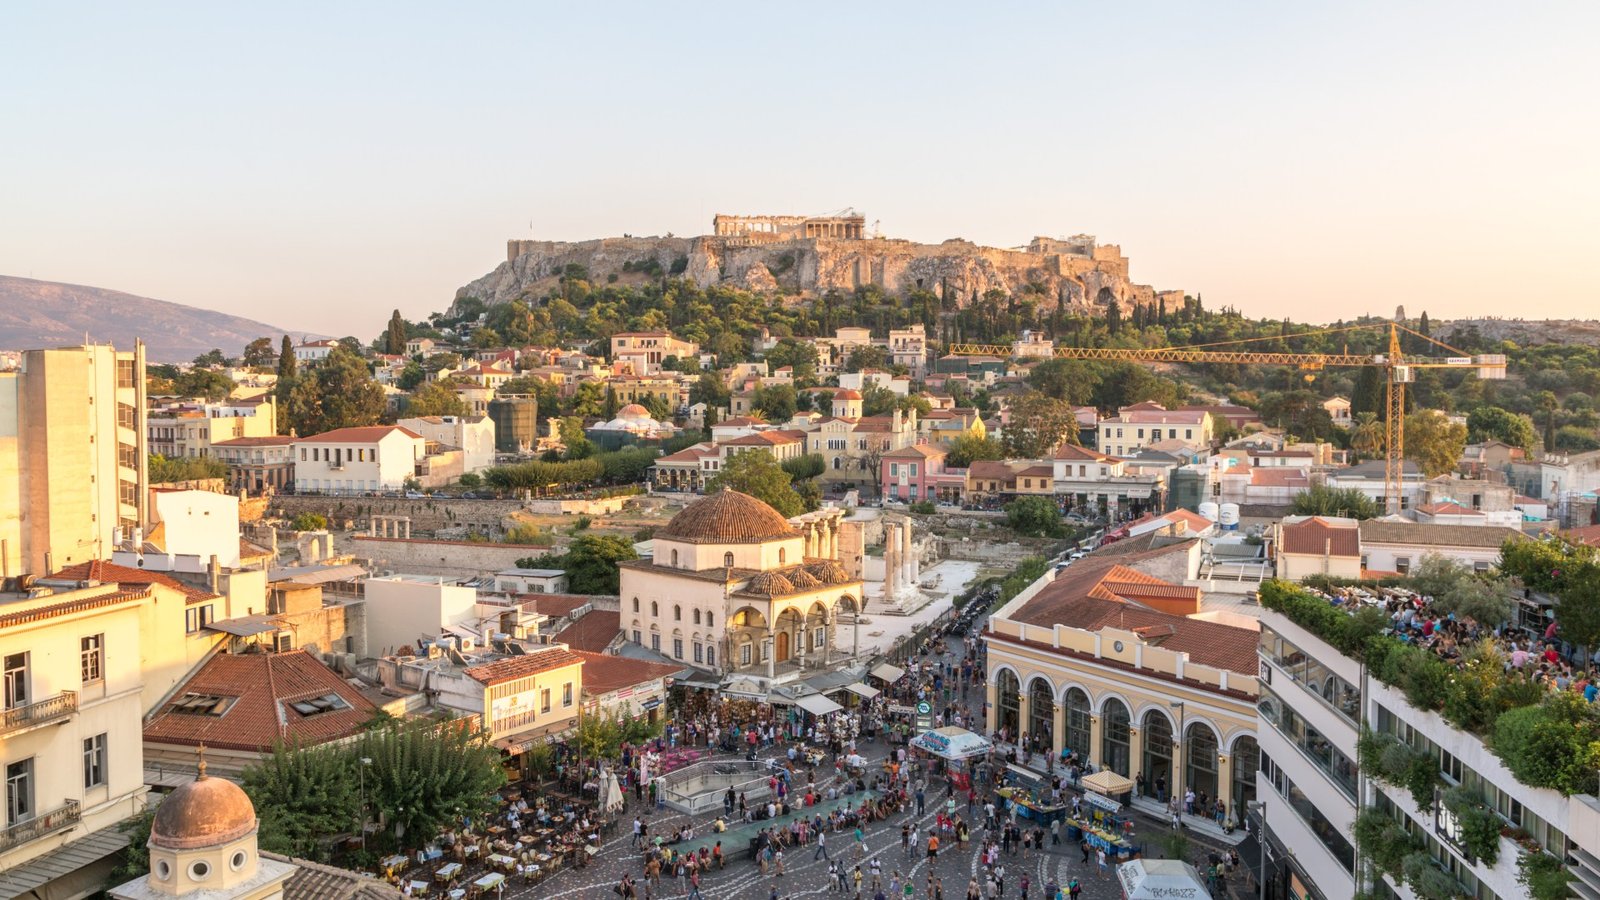 Greece rocked by 5.7 magnitude earthquake off coast of Kalamata as shaking felt in holiday hotspots Athens & Crete